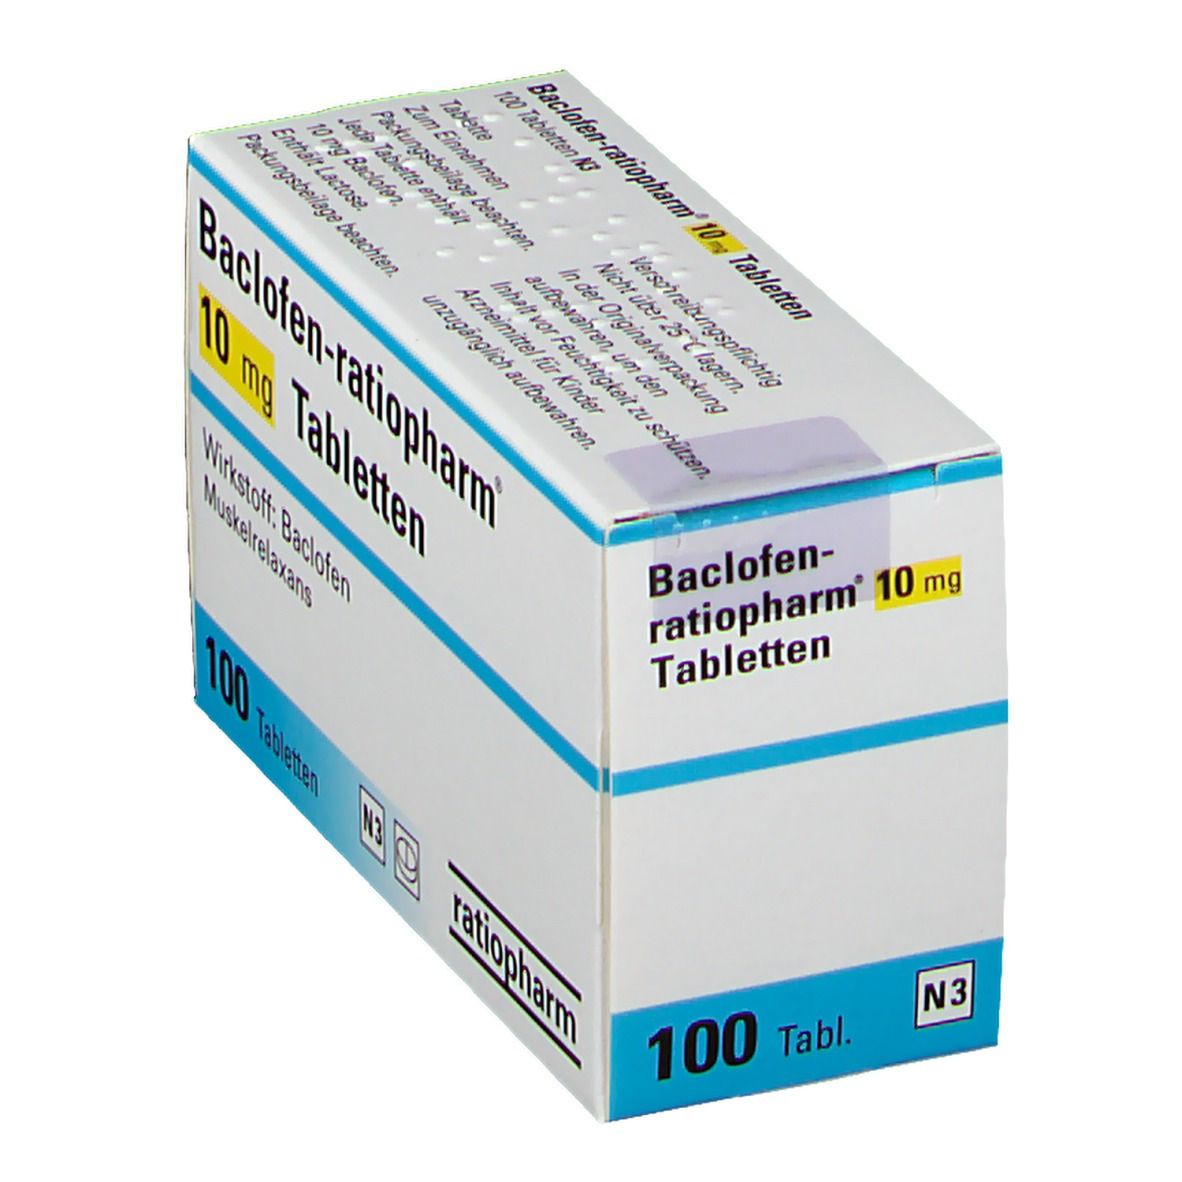 Baclofen-ratiopharm® 10 mg